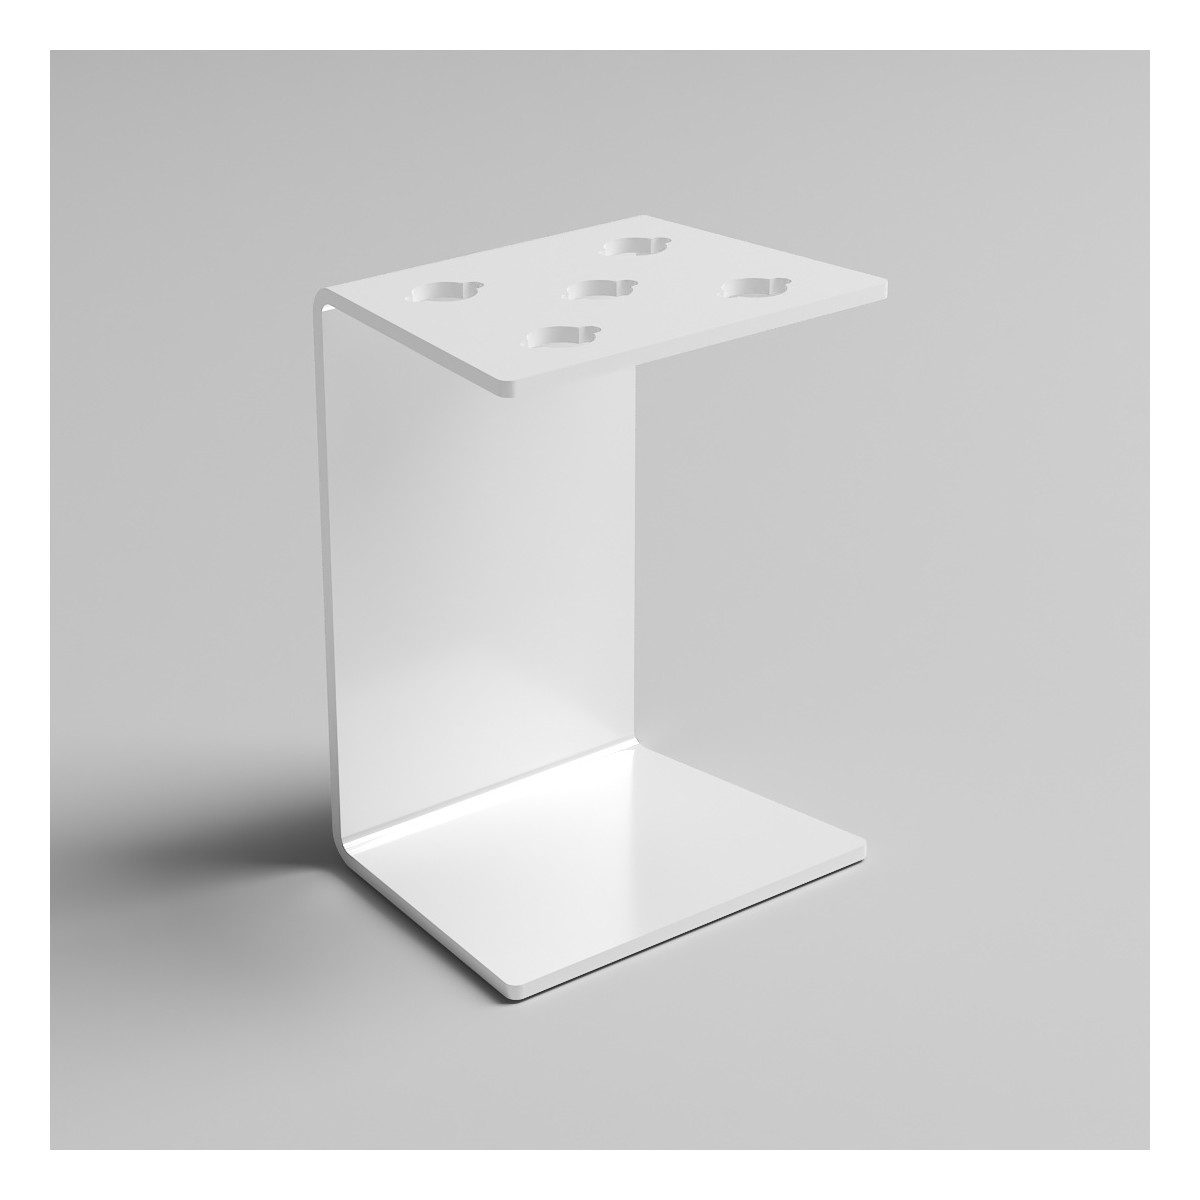 E-1205 PPE-D - Portaforbici in plexiglass bianco lucido - Misure: 12x9x H 16 cm.